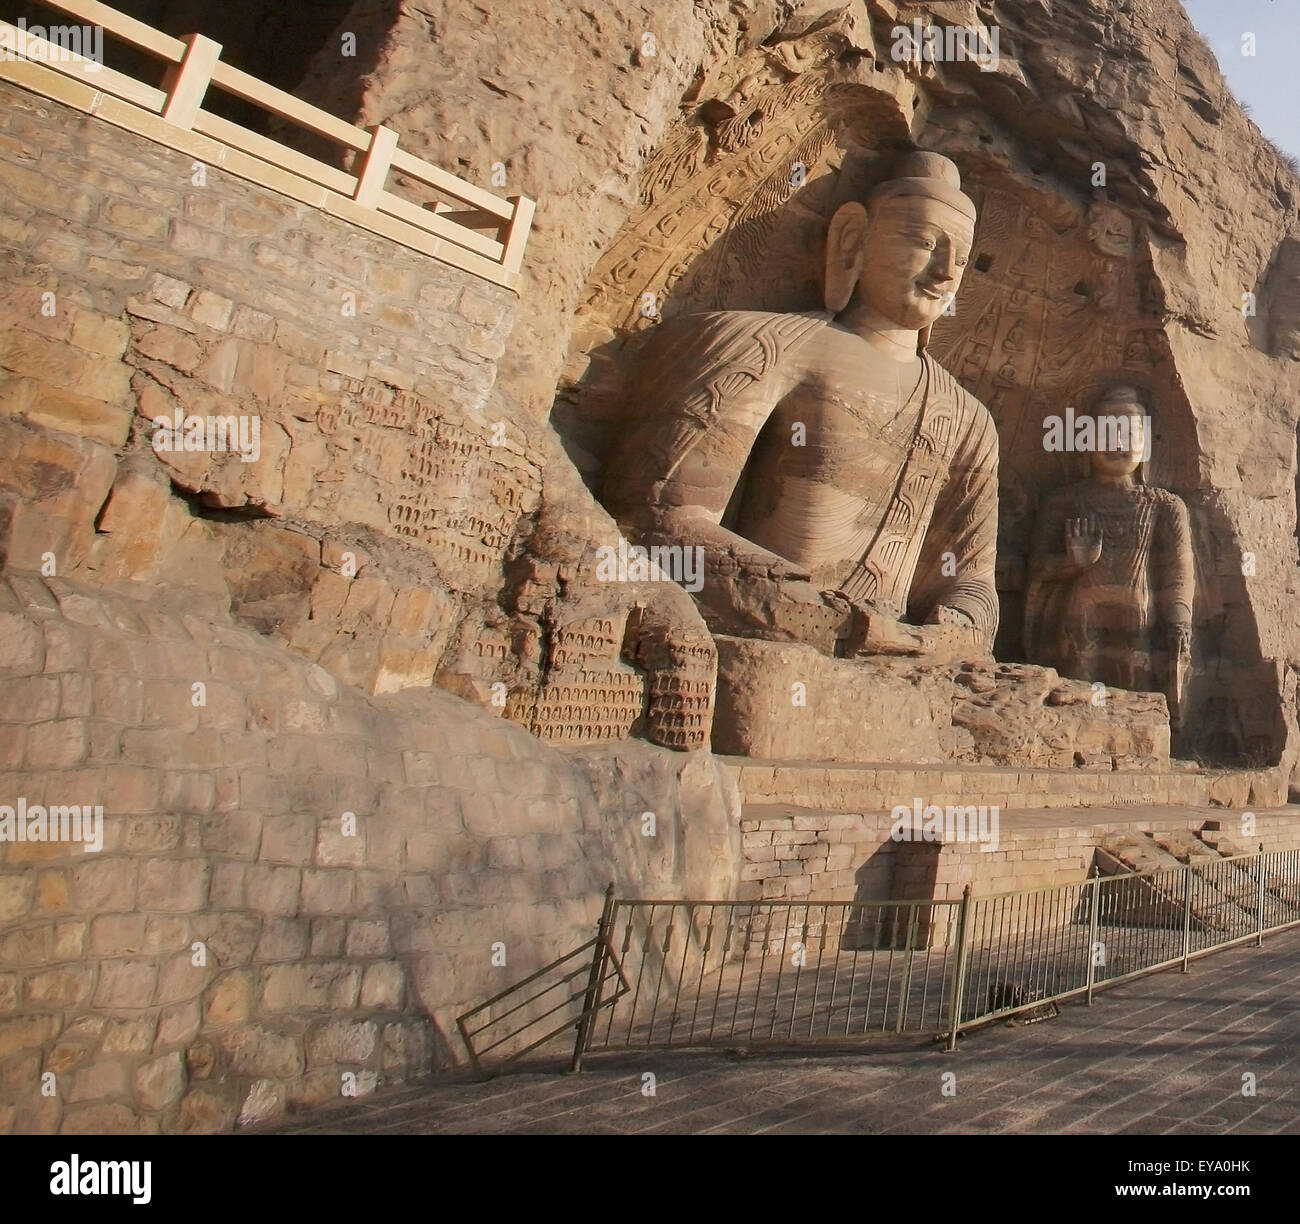 Buddhist Statues And Carvings At Yungang Caves, Wuzhou Shan Mountains,China Stock Photo